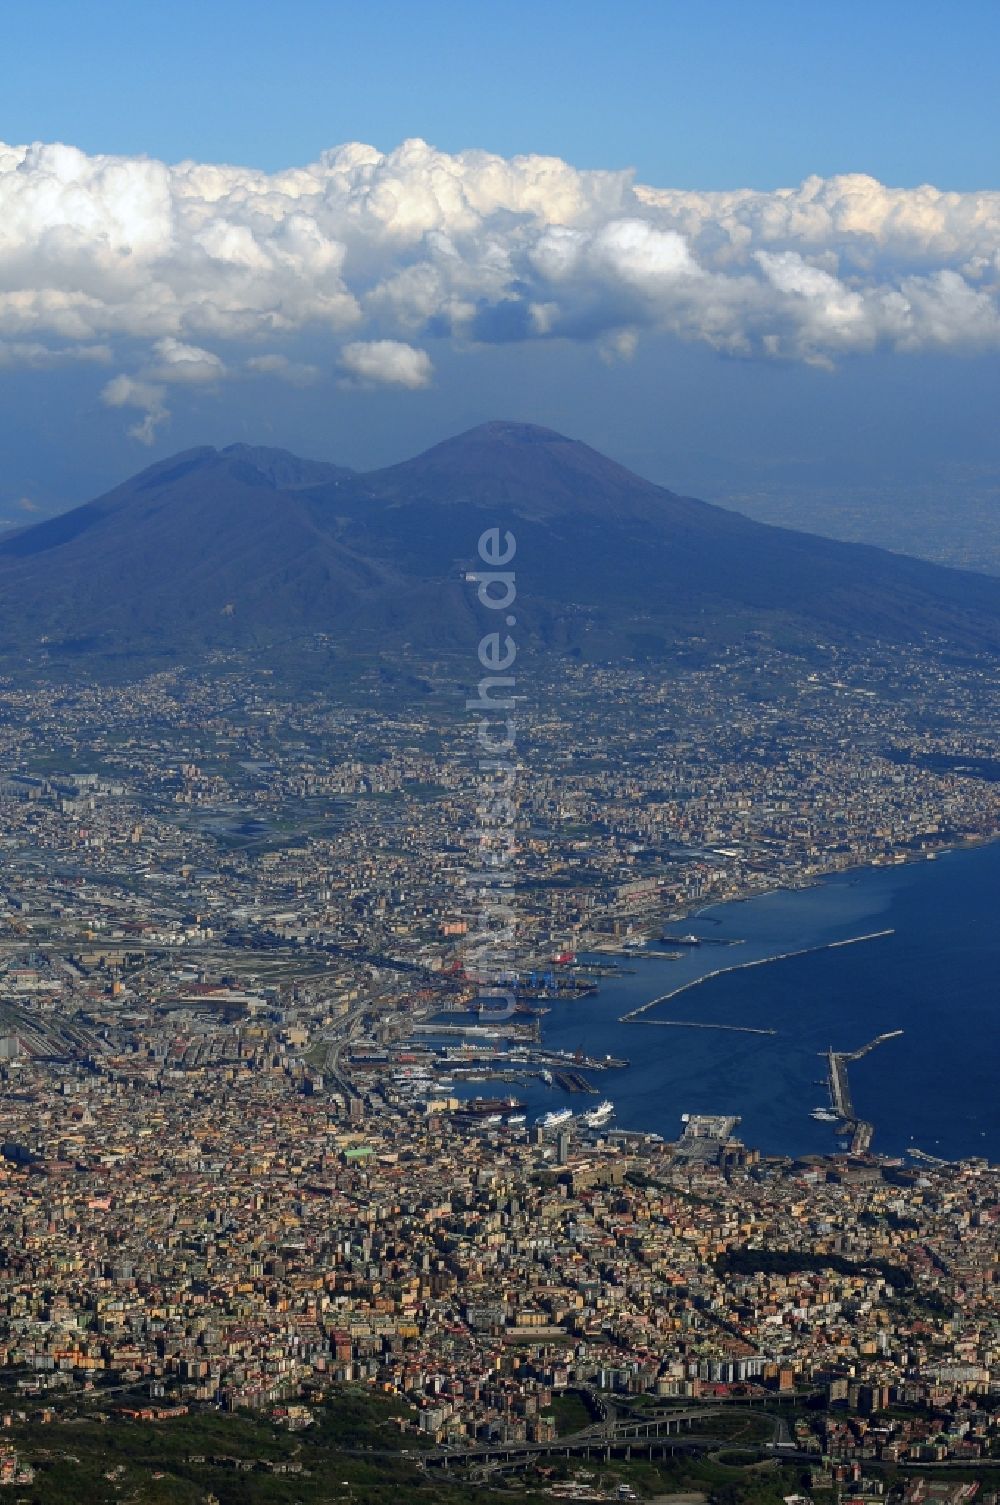 Luftaufnahme Neapel - Historische Altstadt von Neapel in Italien